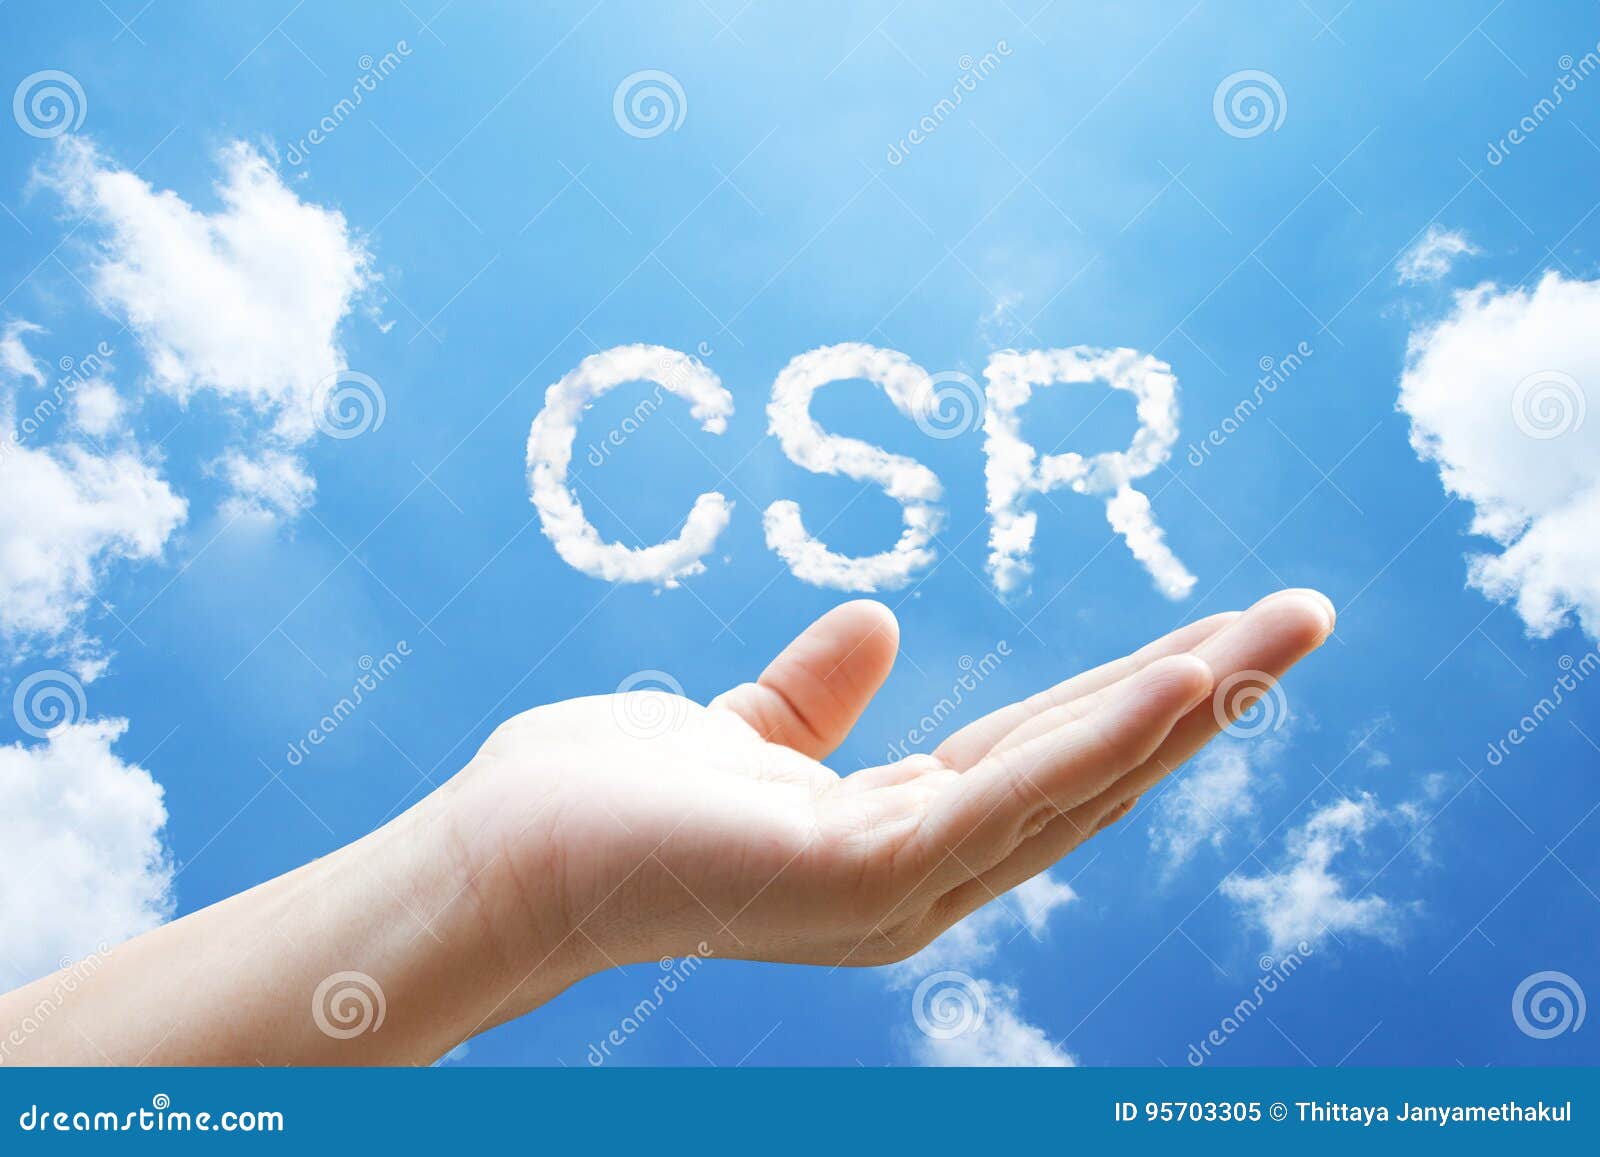 csr or corporate social responsibility cloud word